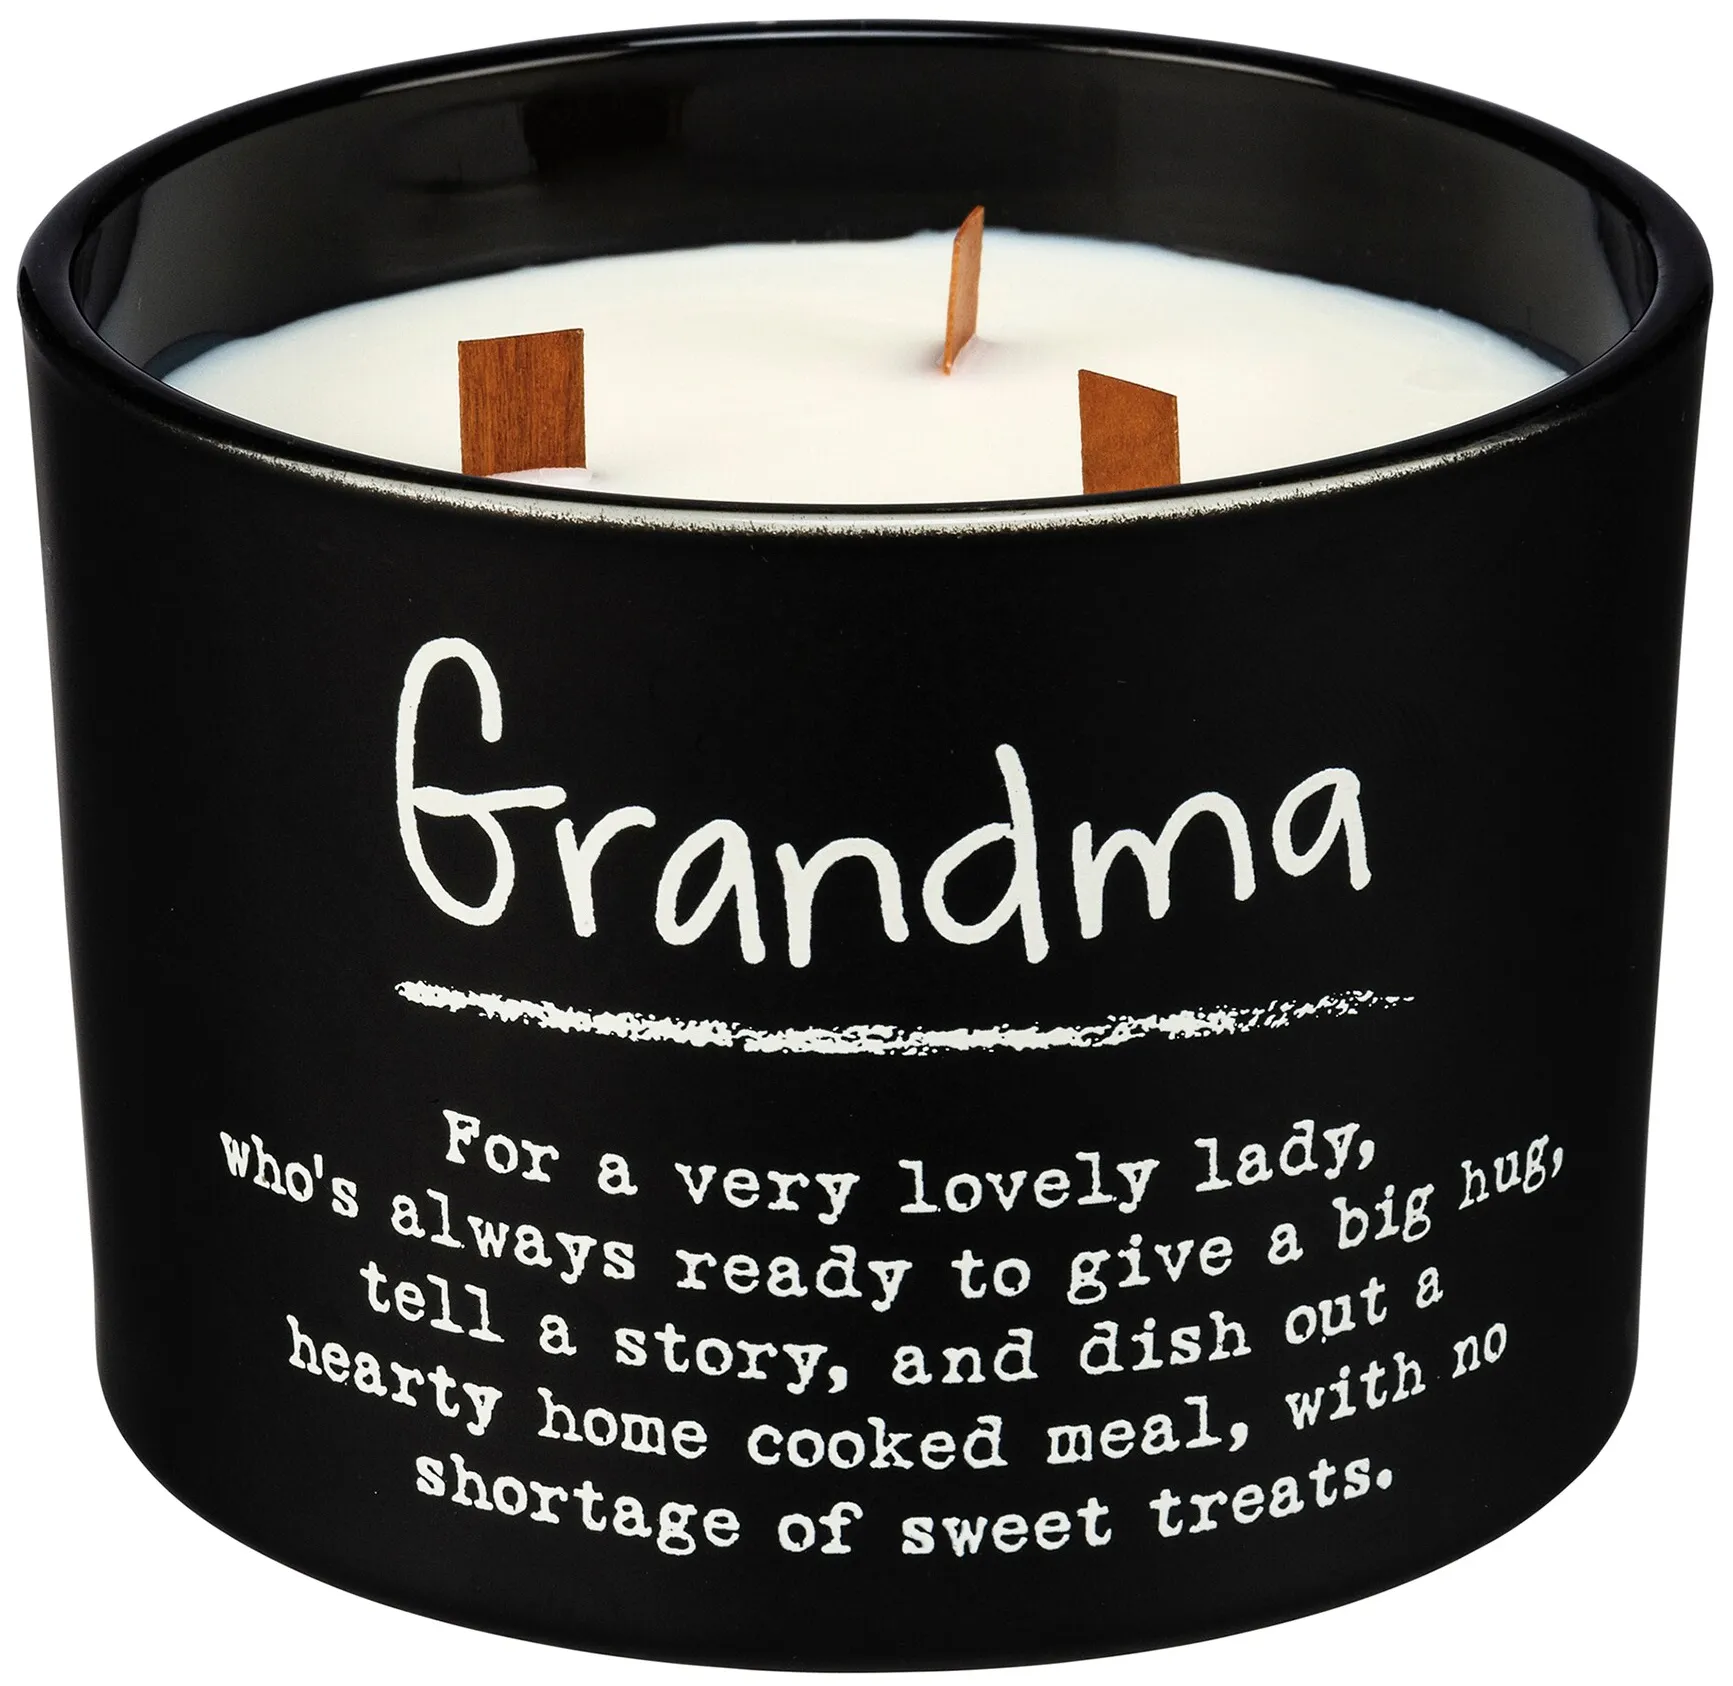 Grandma Lavender Candle 3.5"W x 4.5"H